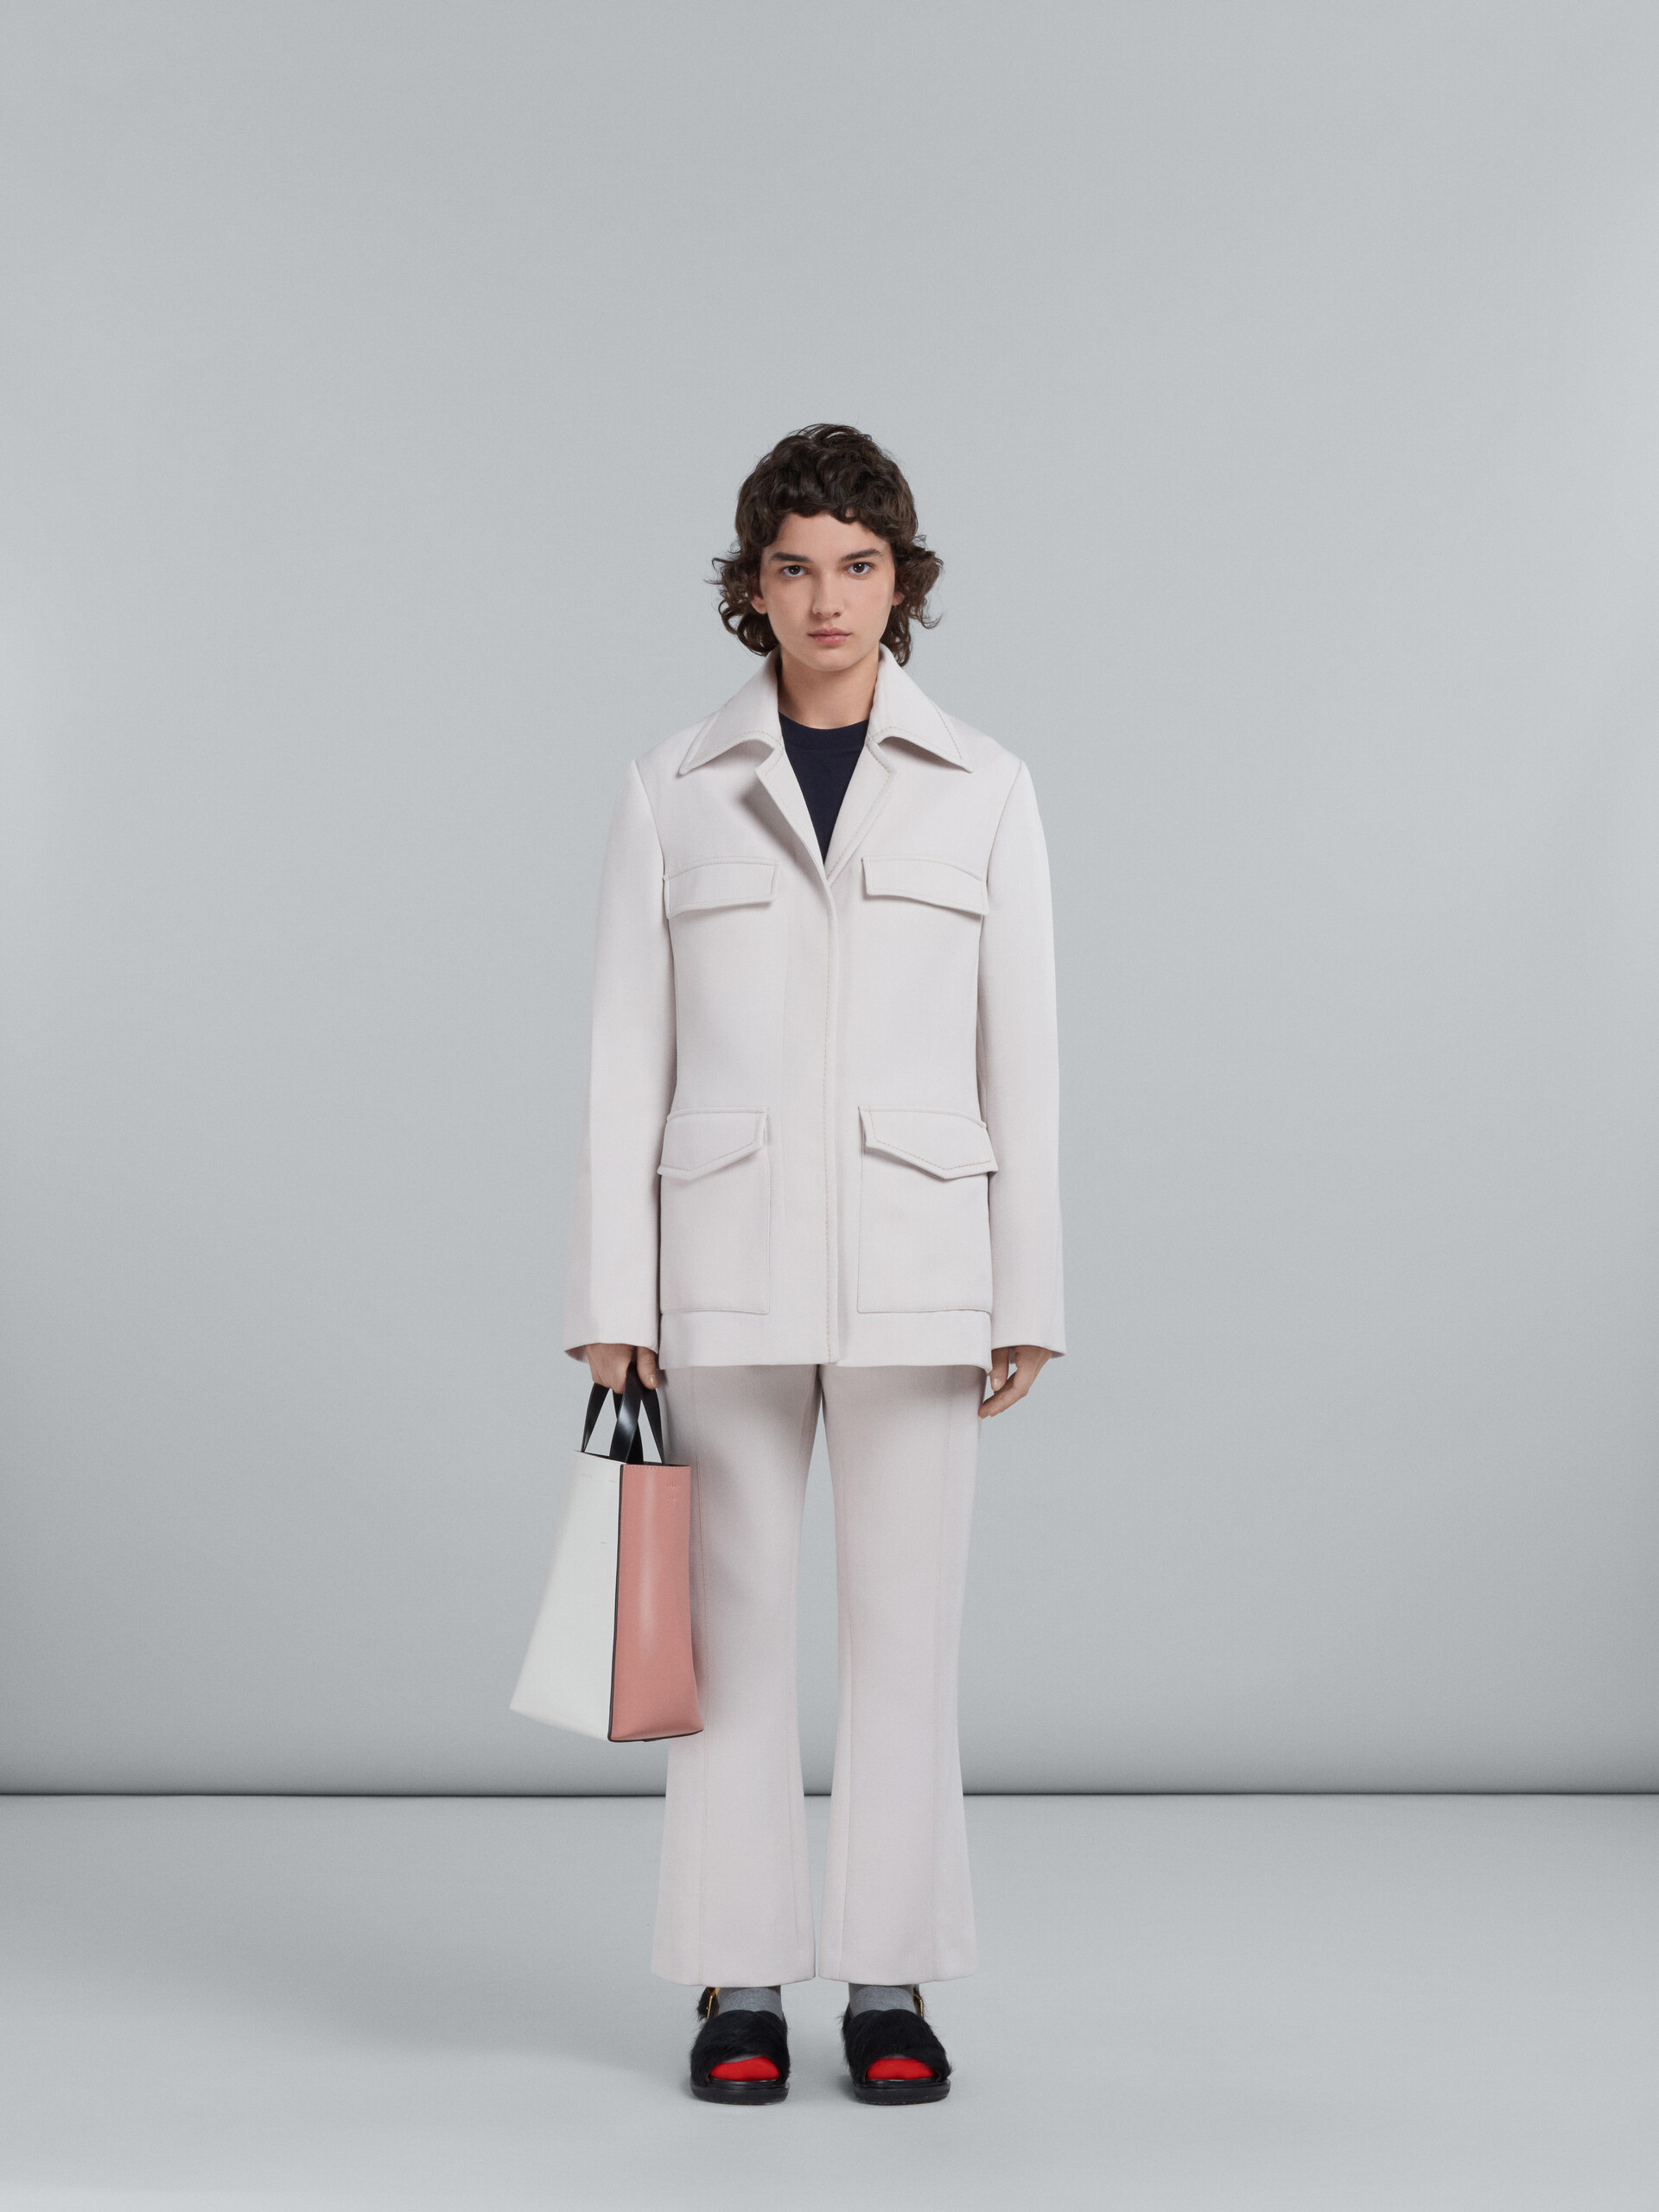 Museo Soft Bag Piccola in pelle bianca e rosa - Borse shopping - Image 2